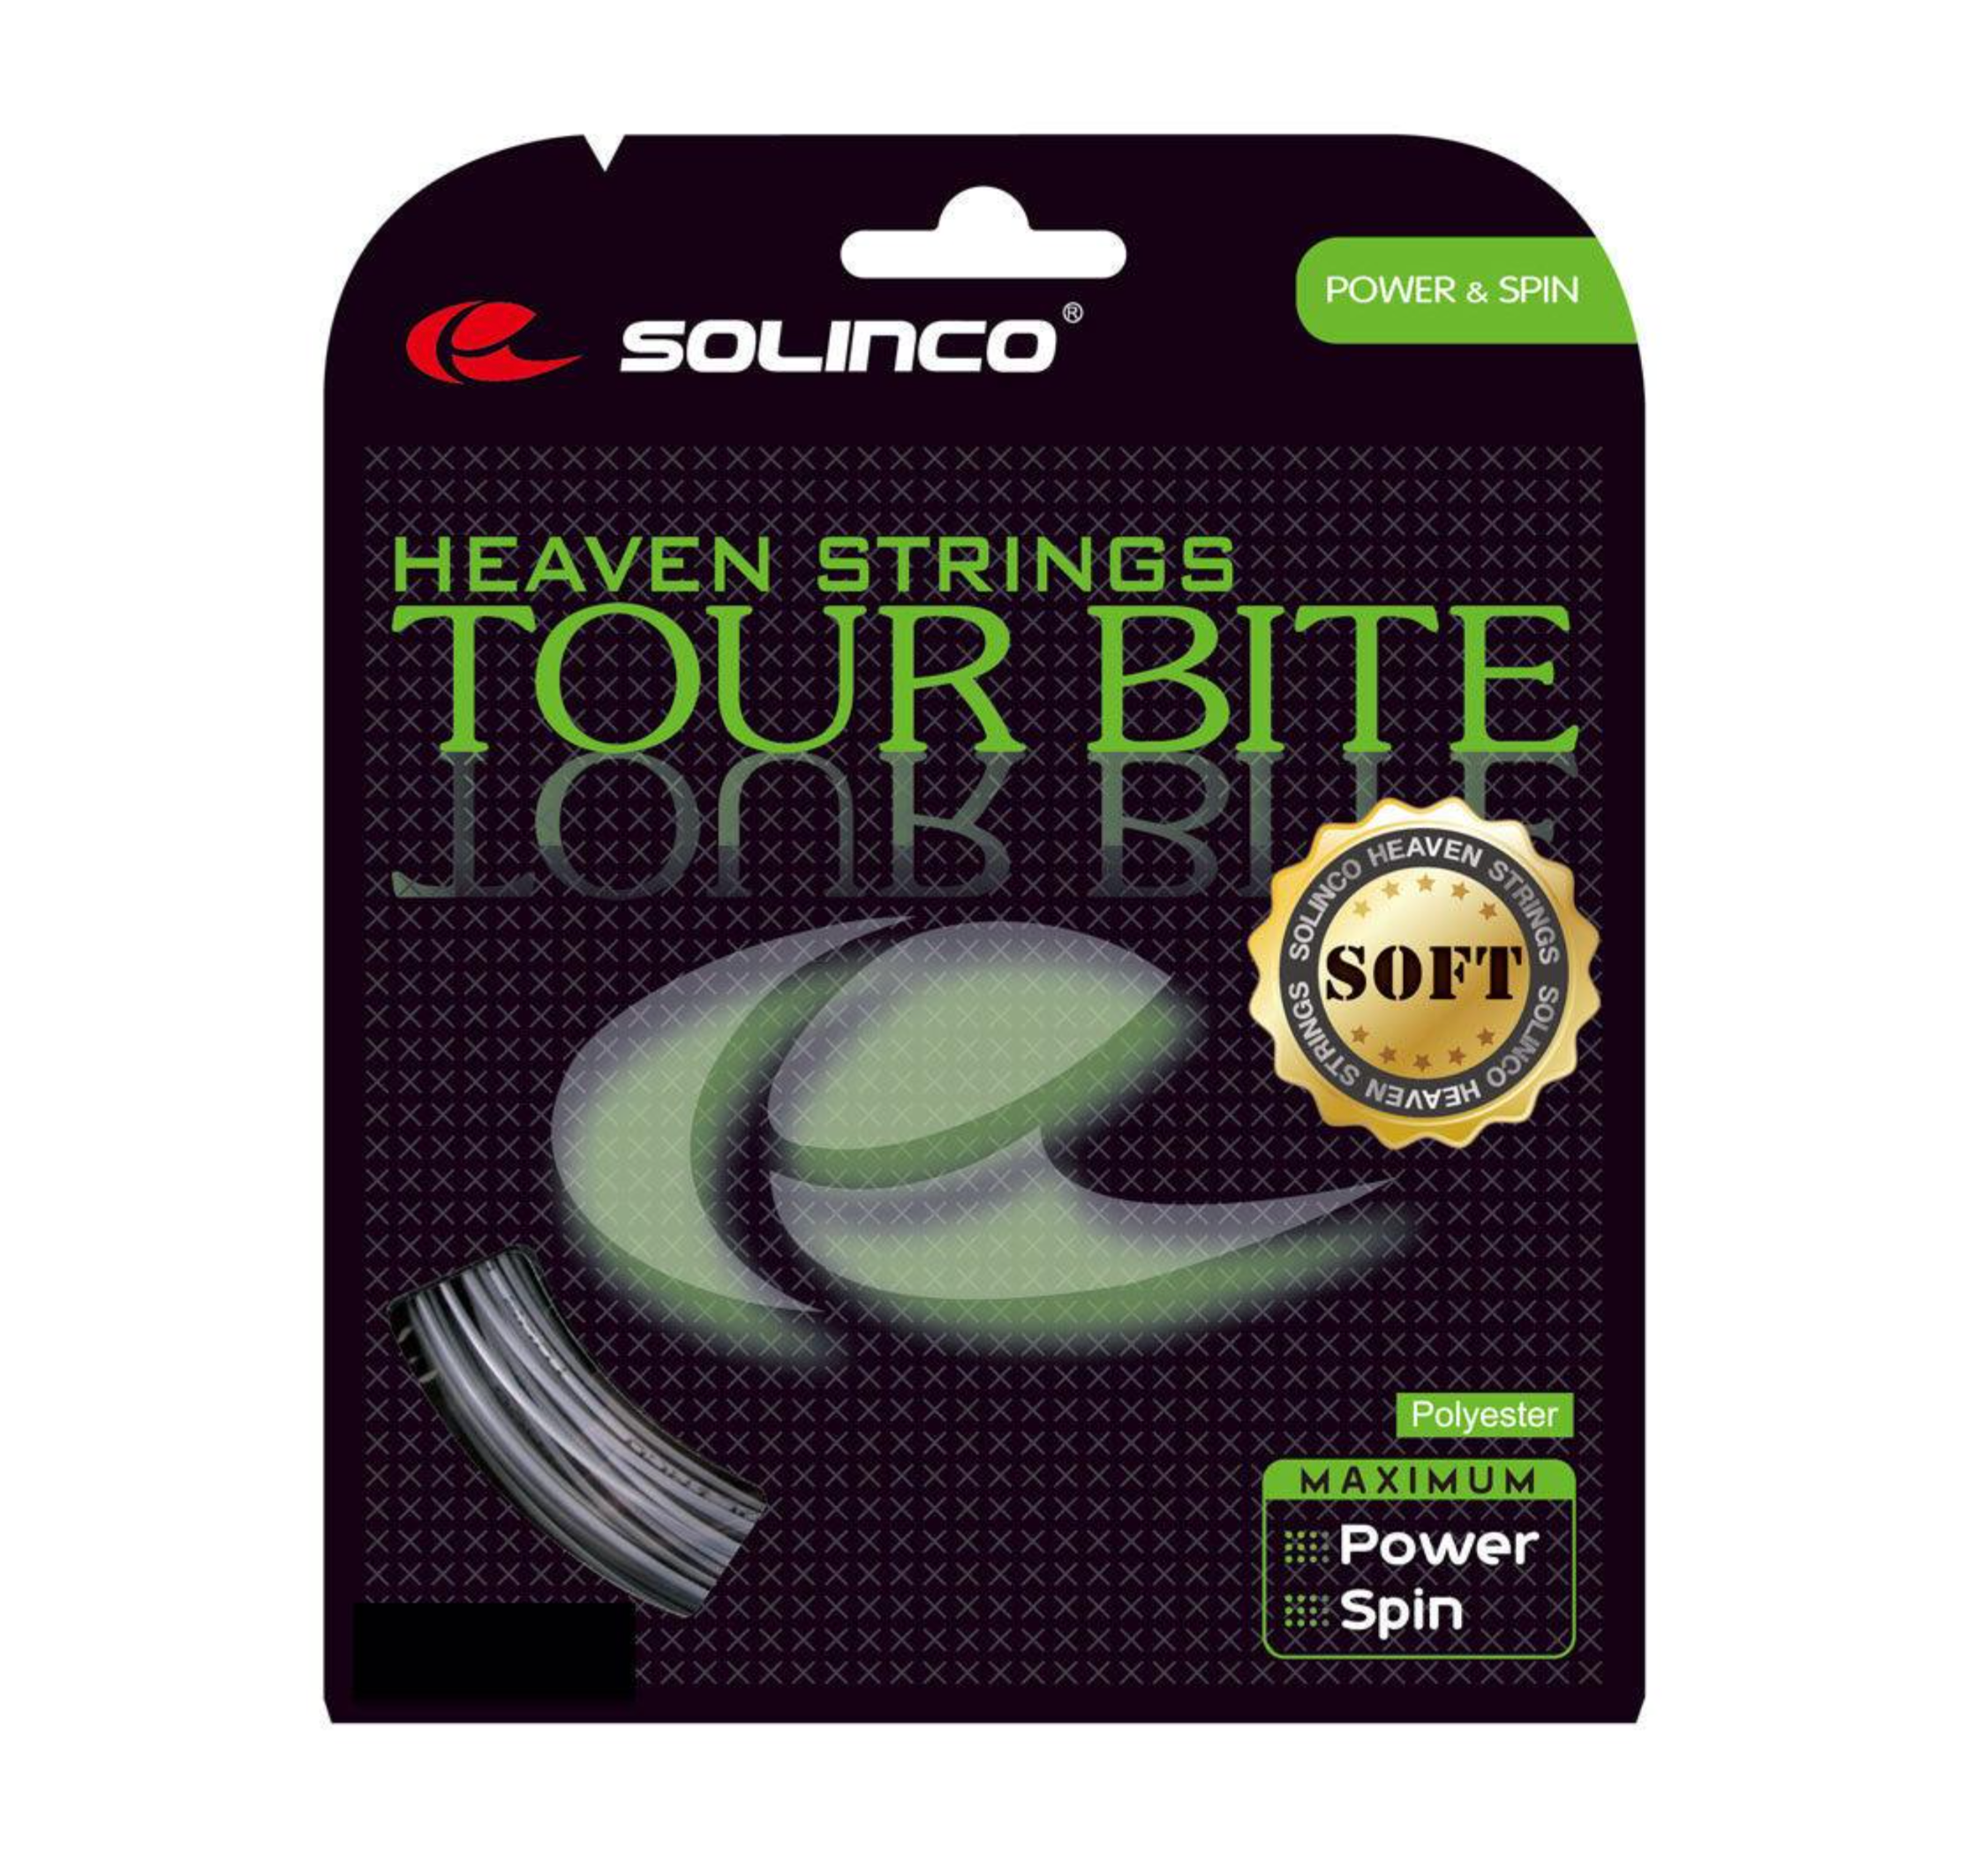 Solinco Tour Bite Soft String providing maximum power and spin